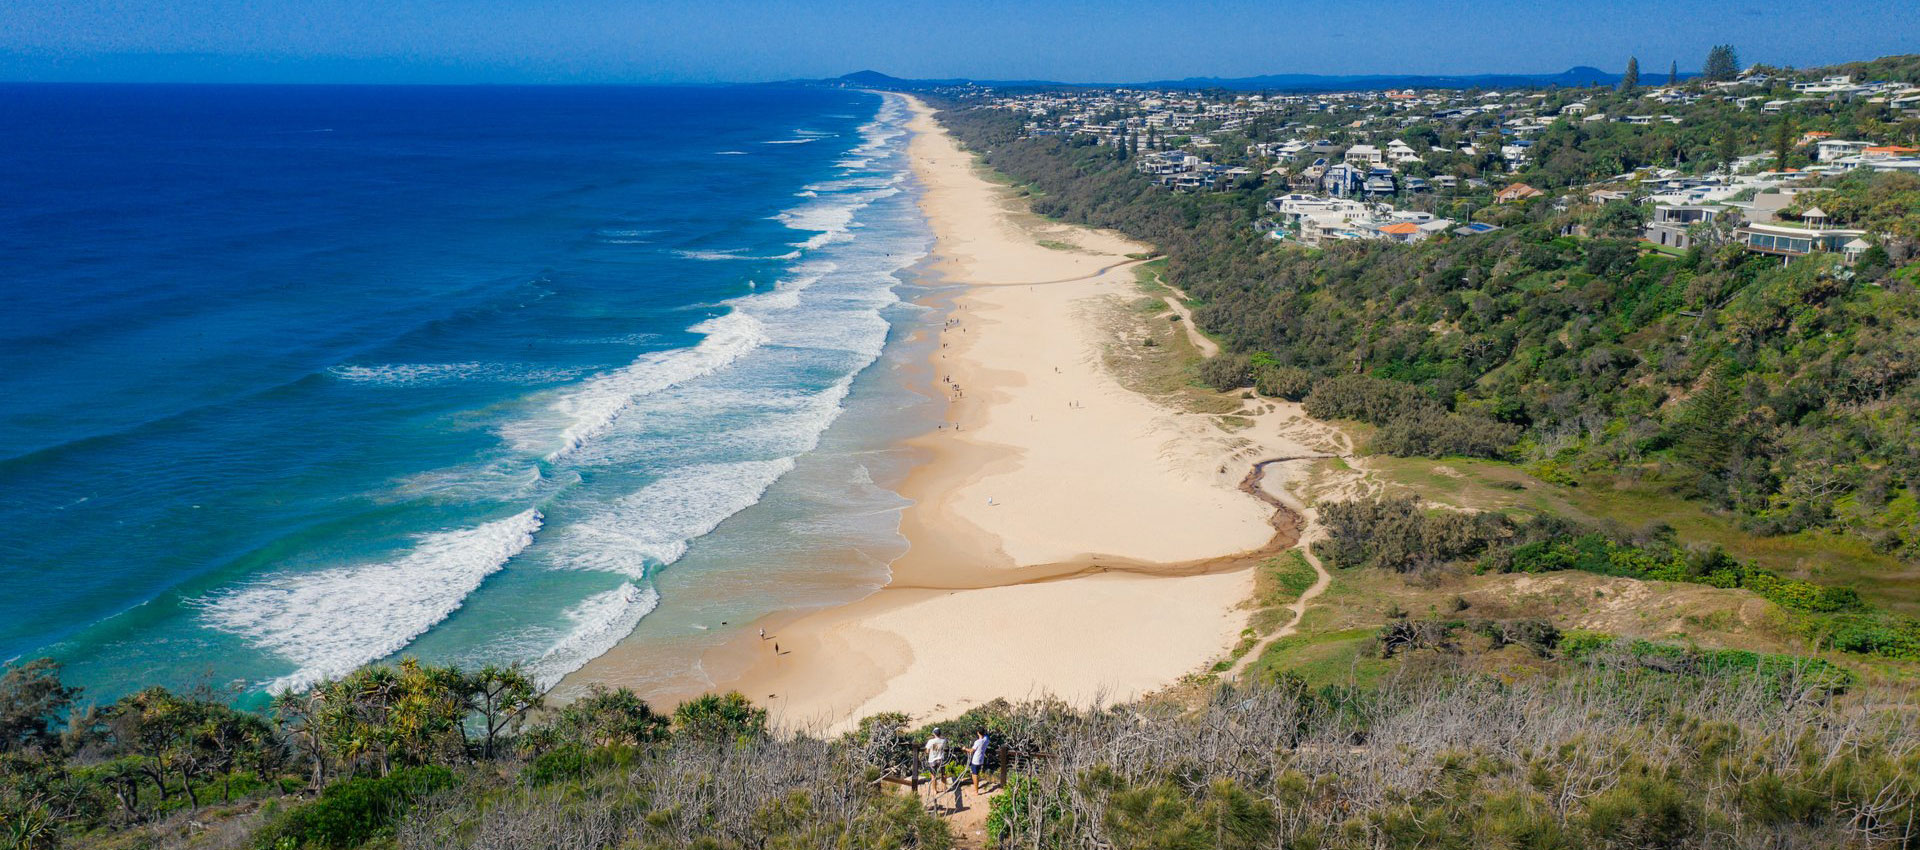 krak Begge dæk 7 Sunshine Coast beaches in 7 sunshine-filled days - Visit Sunshine Coast